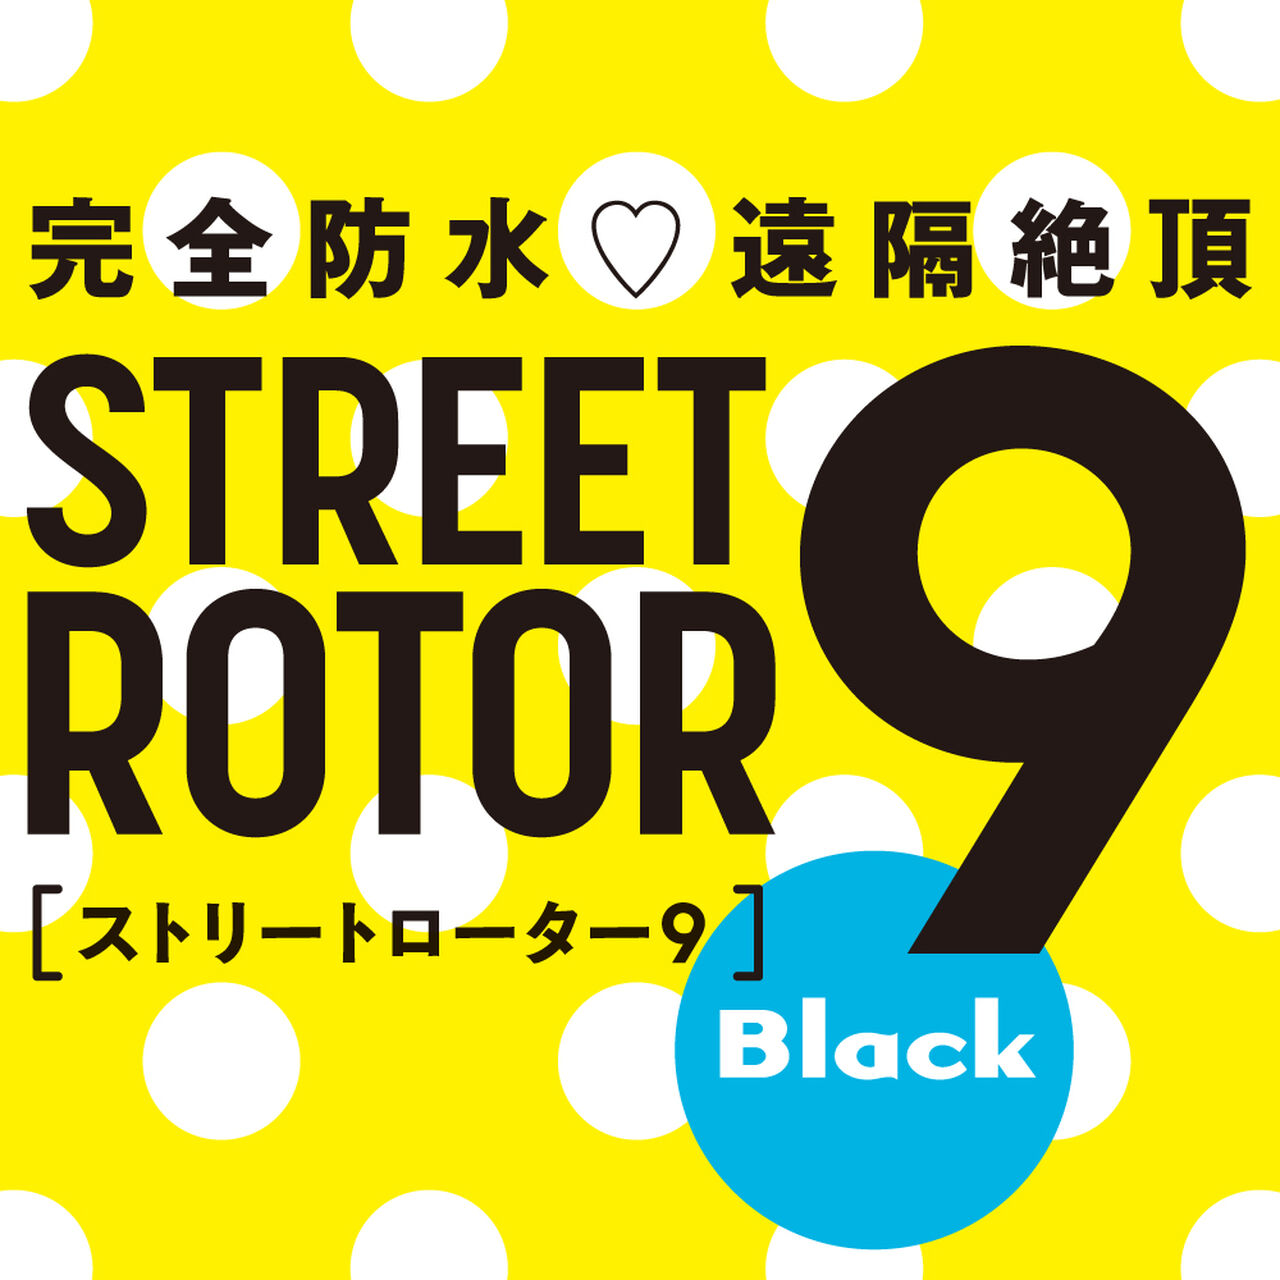 STREET ROTOR 9 black,, large image number 1